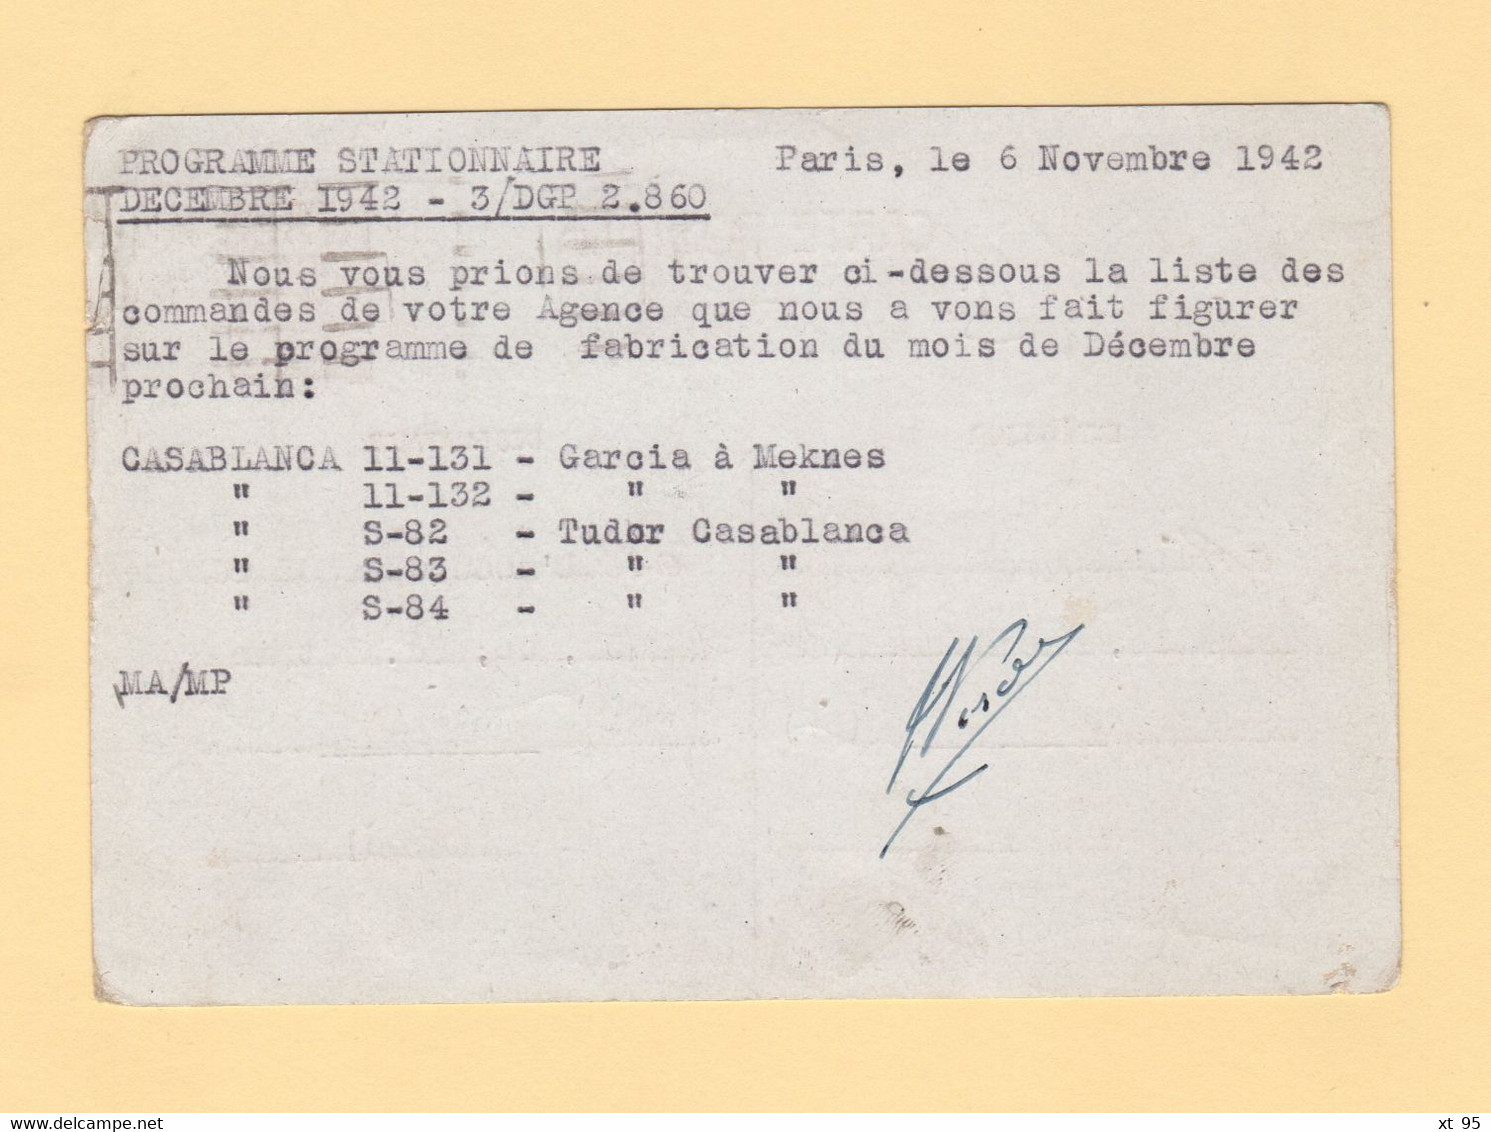 Relations Suspendues - Retour A L Envoyeur - 9 Dec 1942 - Paris Destination Maroc - Guerre De 1939-45